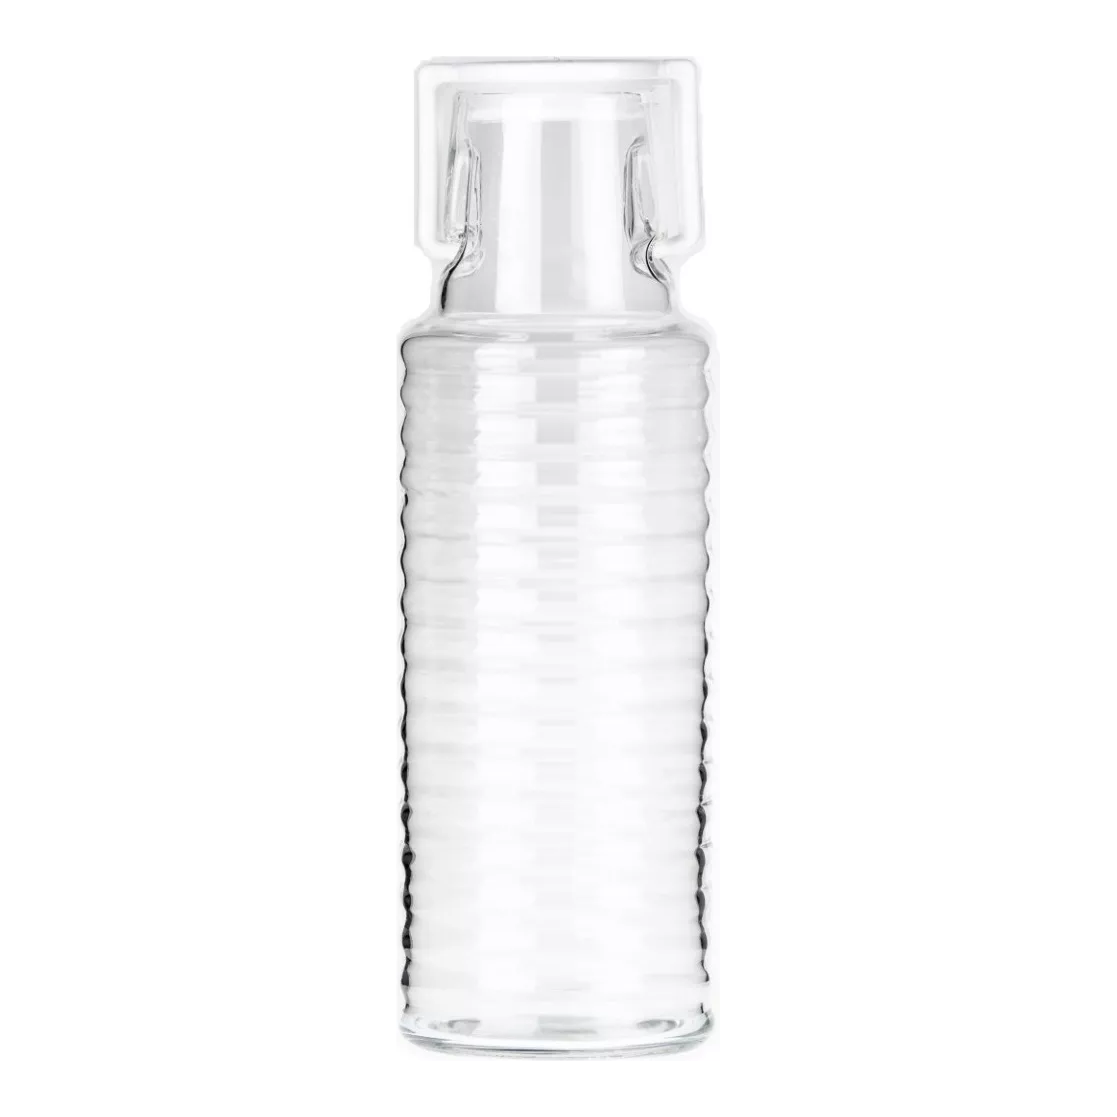 Borgonovo Argo - Botella De Vidrio Capacidad 1.1 Lt Con Tapa Blanca Reutilizables Envase de Vidrio Transparente Recargables Para Jugo, Agua